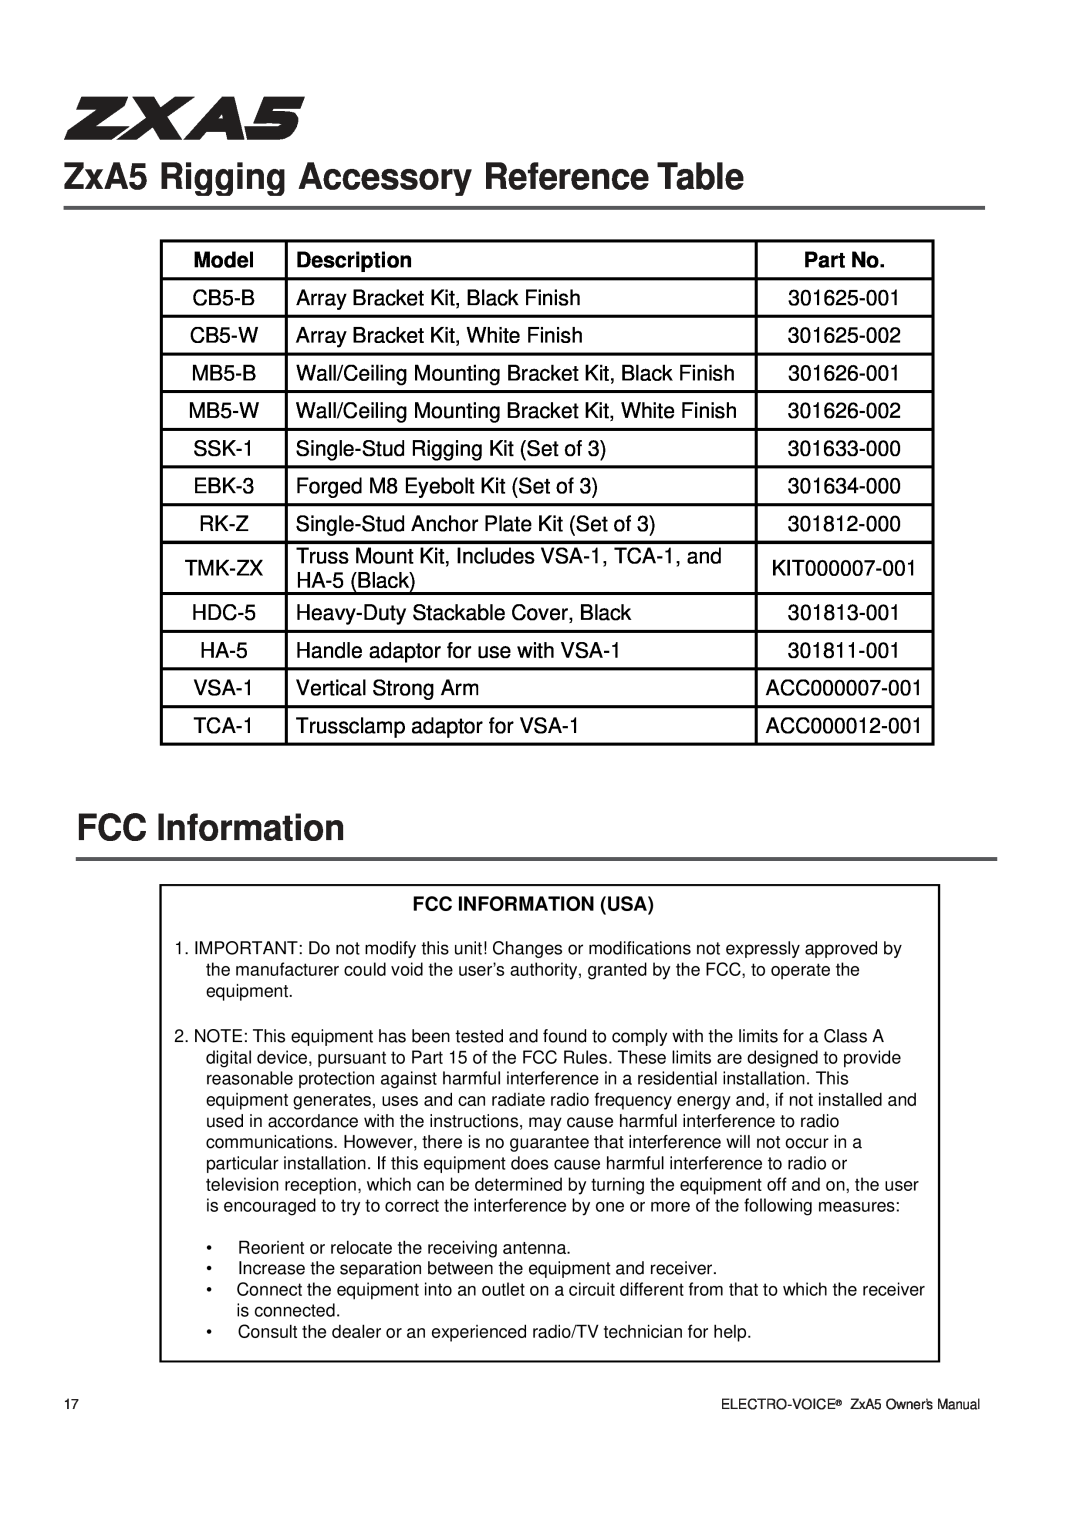 Pentax ZXA5-60, ZXA5-90 owner manual ZxA5 Rigging Accessory Reference Table, FCC Information, Model, Description 